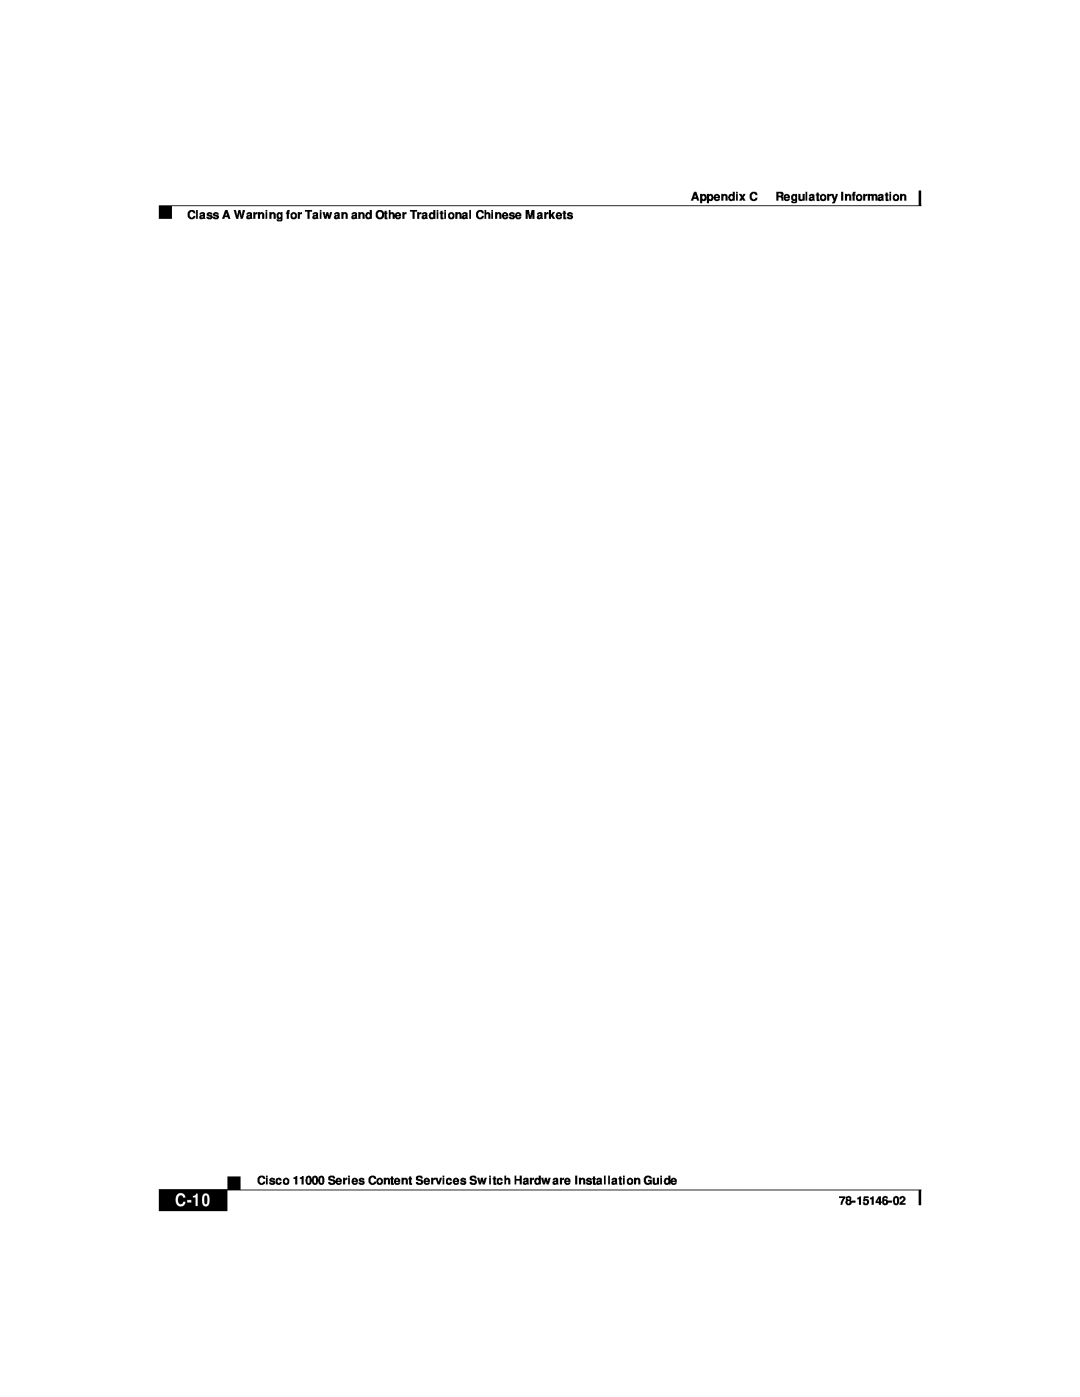 Cisco Systems 11000 Series manual C-10, Appendix C Regulatory Information, 78-15146-02 